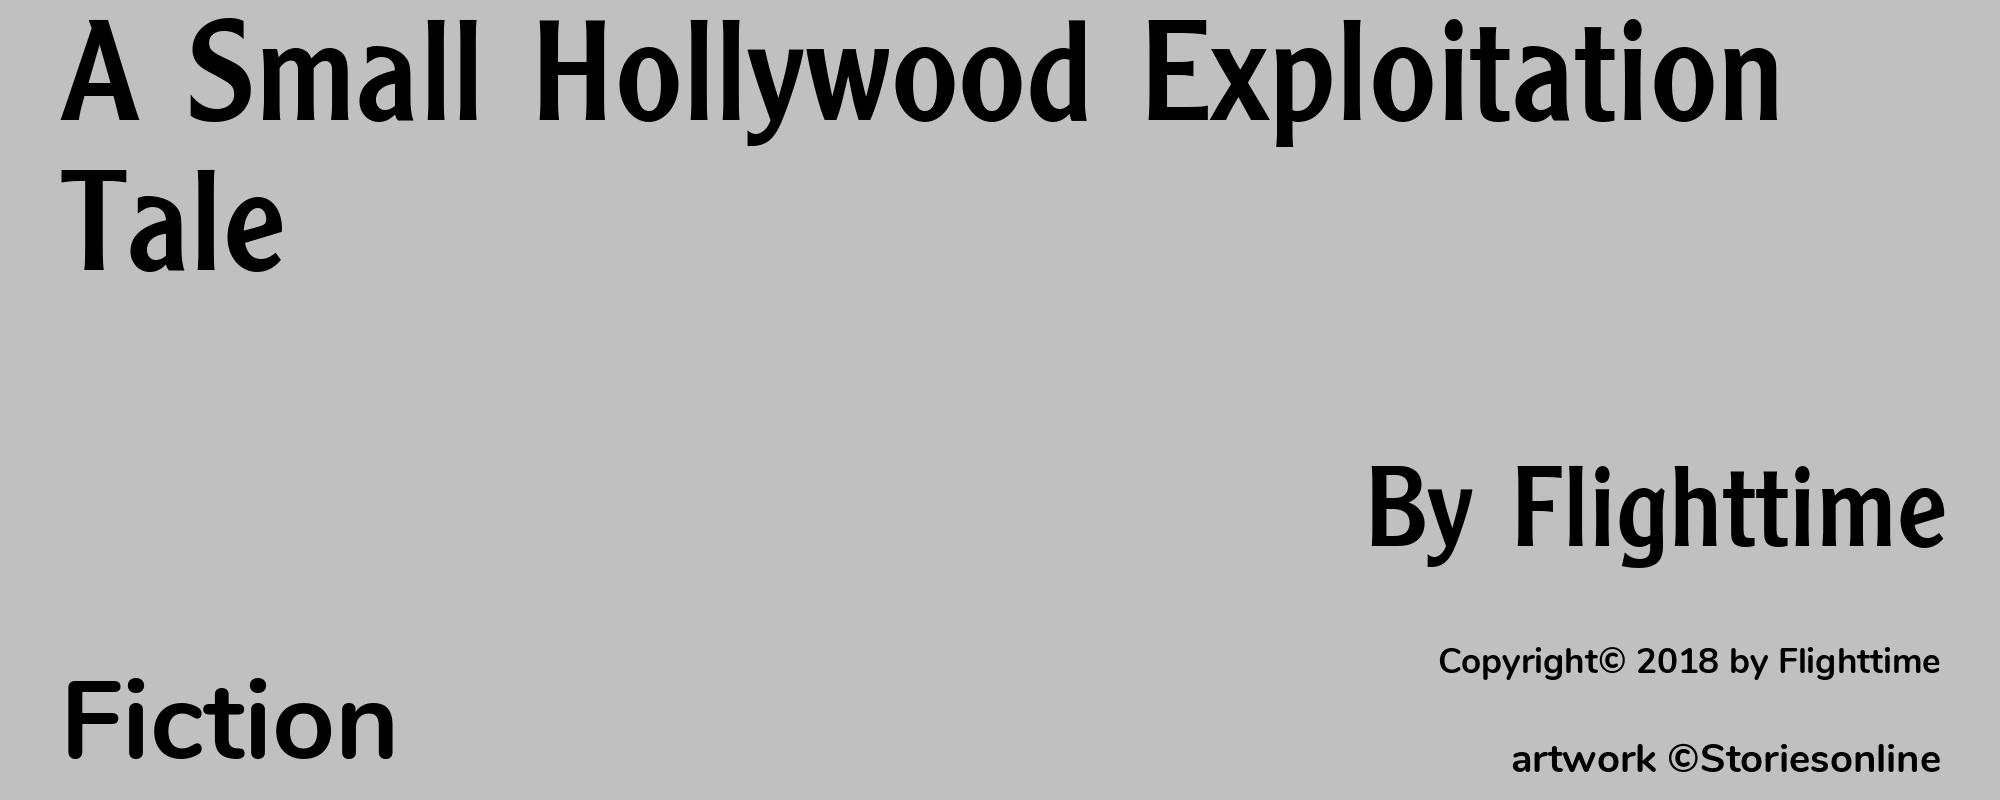 A Small Hollywood Exploitation Tale - Cover